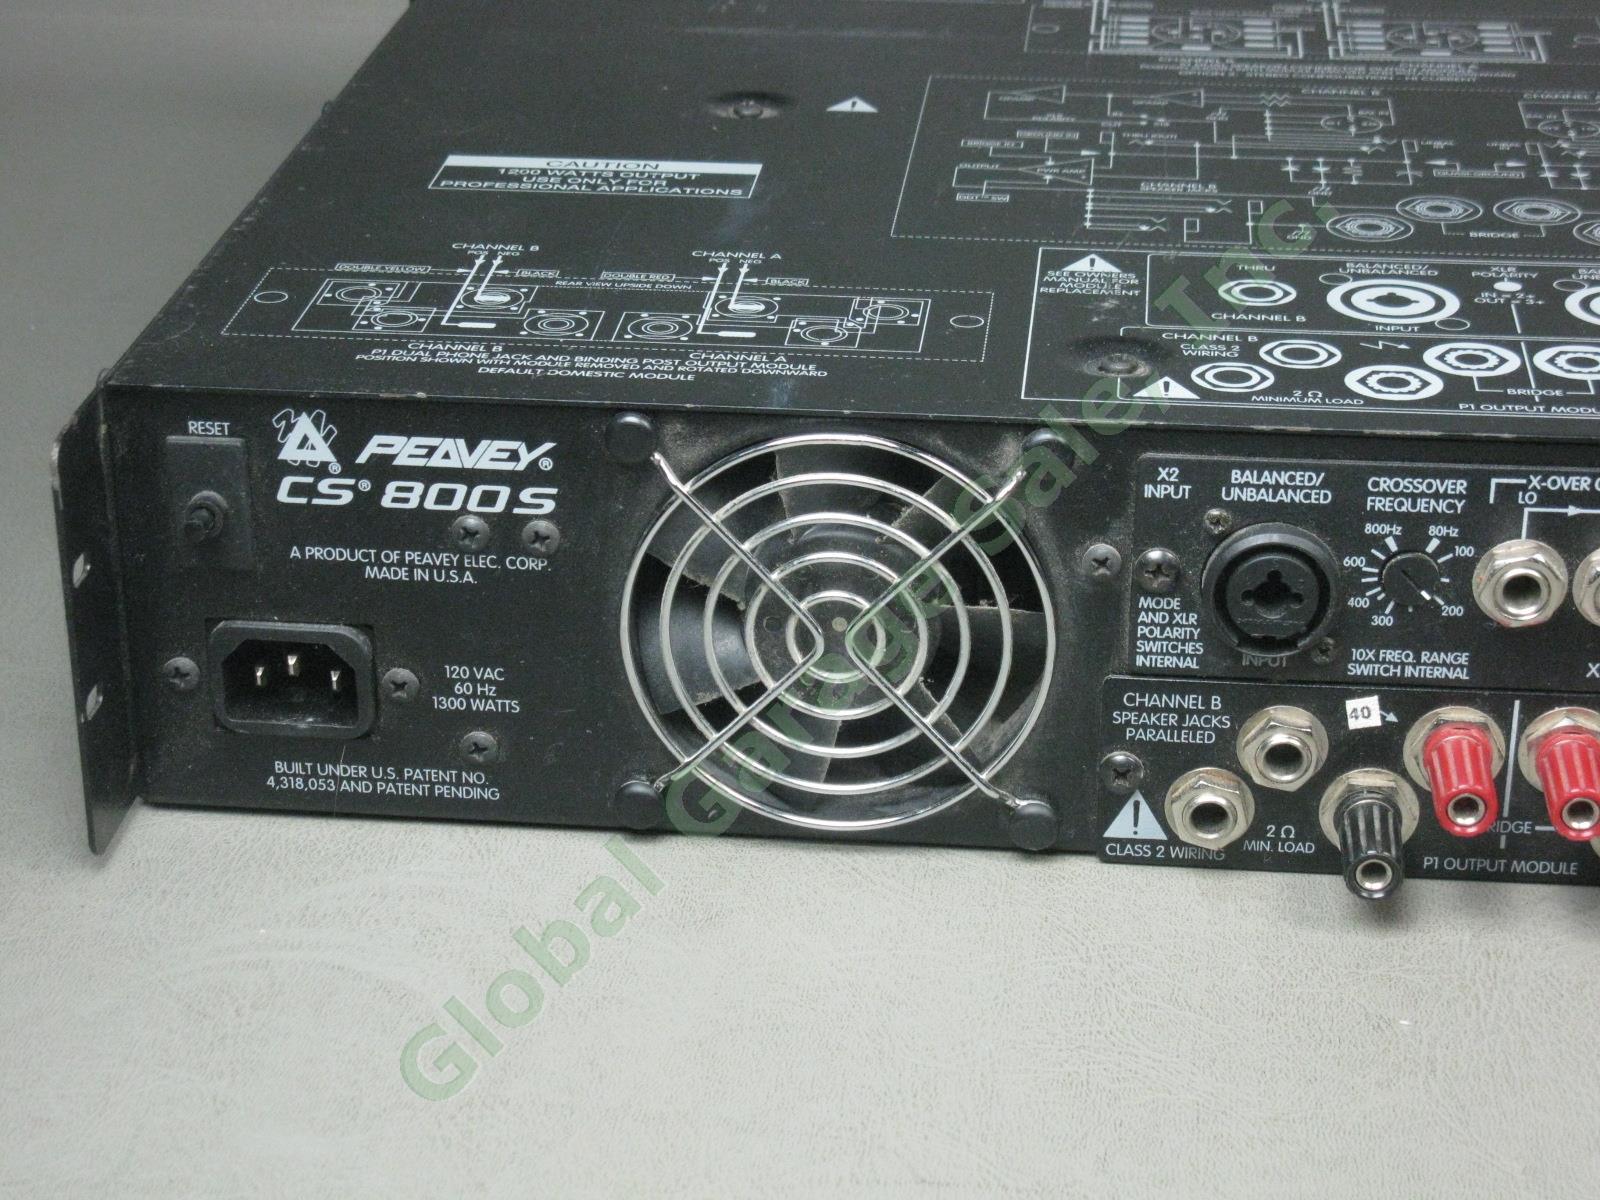 Peavey CS 800S CS800S 1200 Watt Stereo Power Amp Pro Audio Amplifier No Reserve! 5